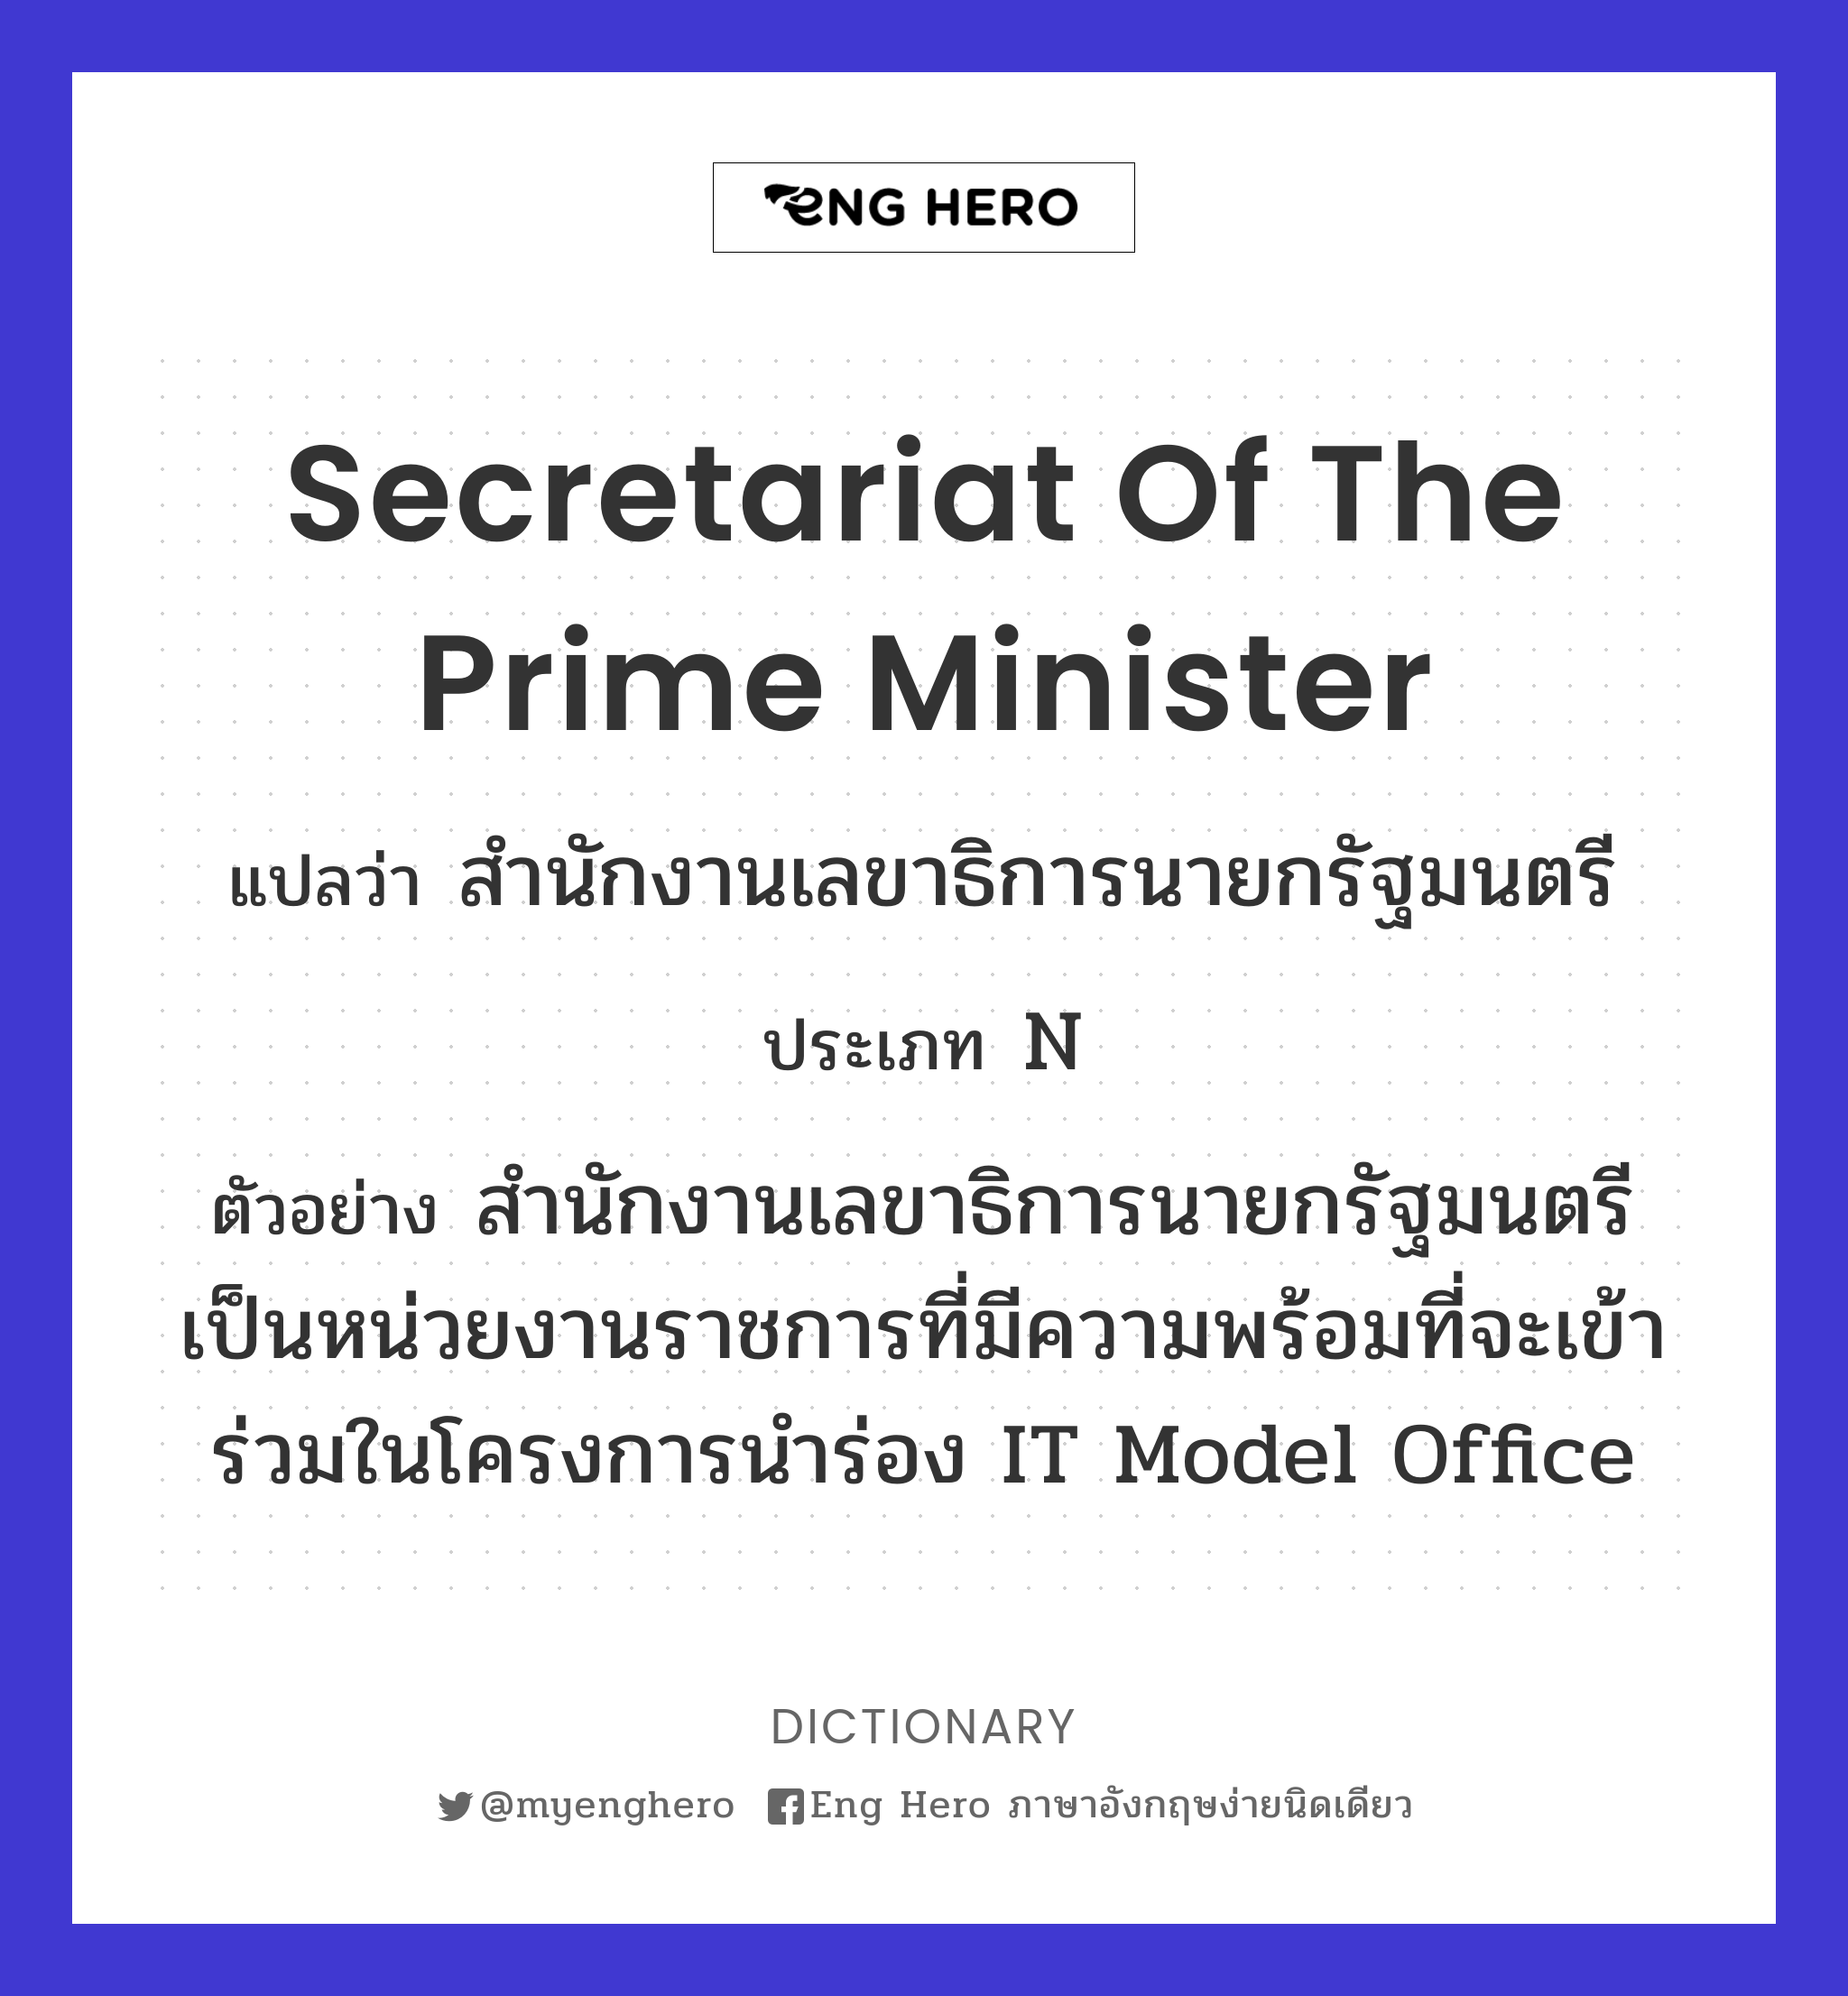 Secretariat of the Prime Minister